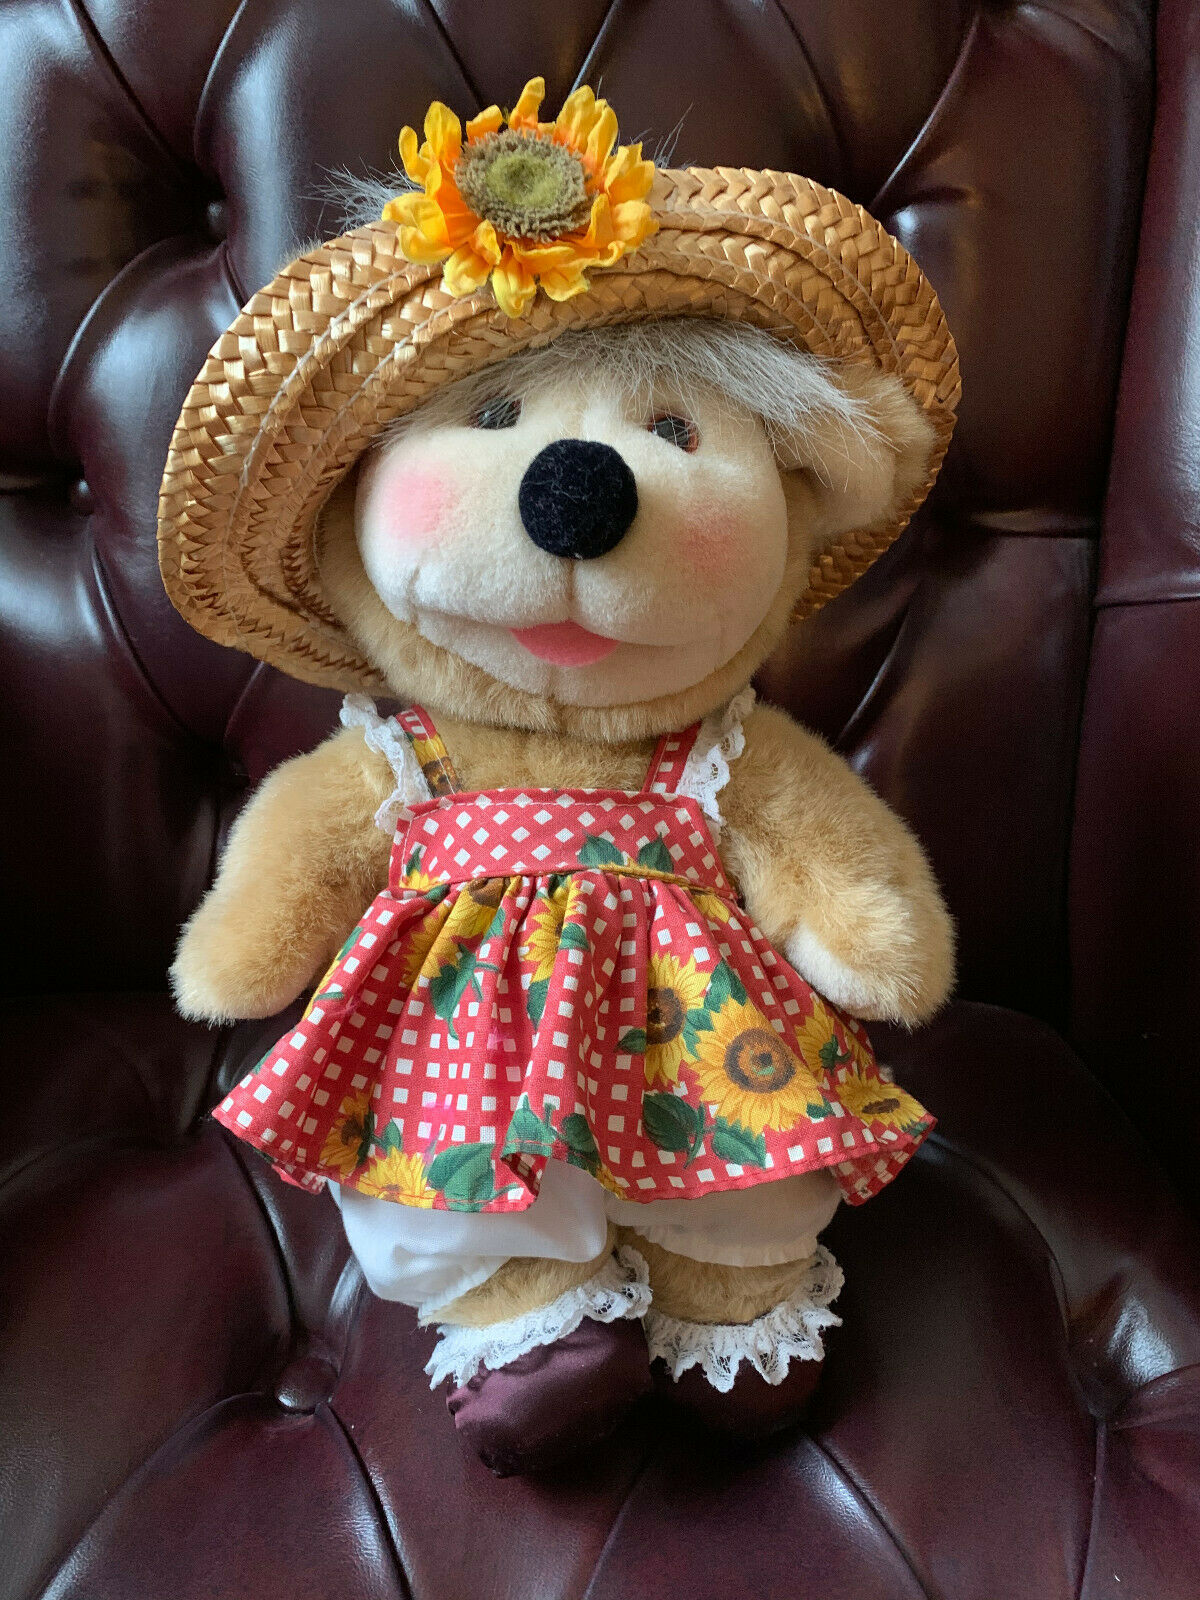 1991-all Stuffed Up Teddy Bear By Linda Novick All Stuffed Up By Linda Novick